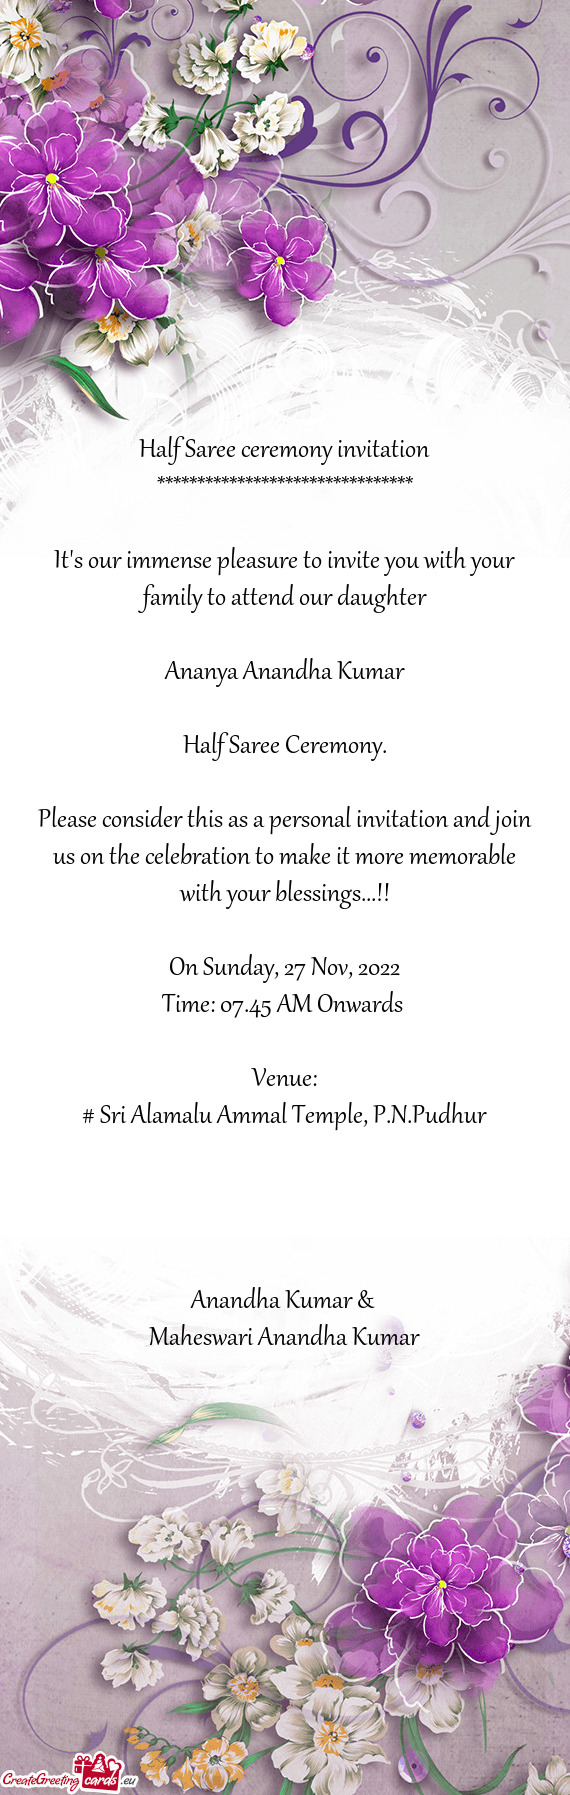 Ananya Anandha Kumar